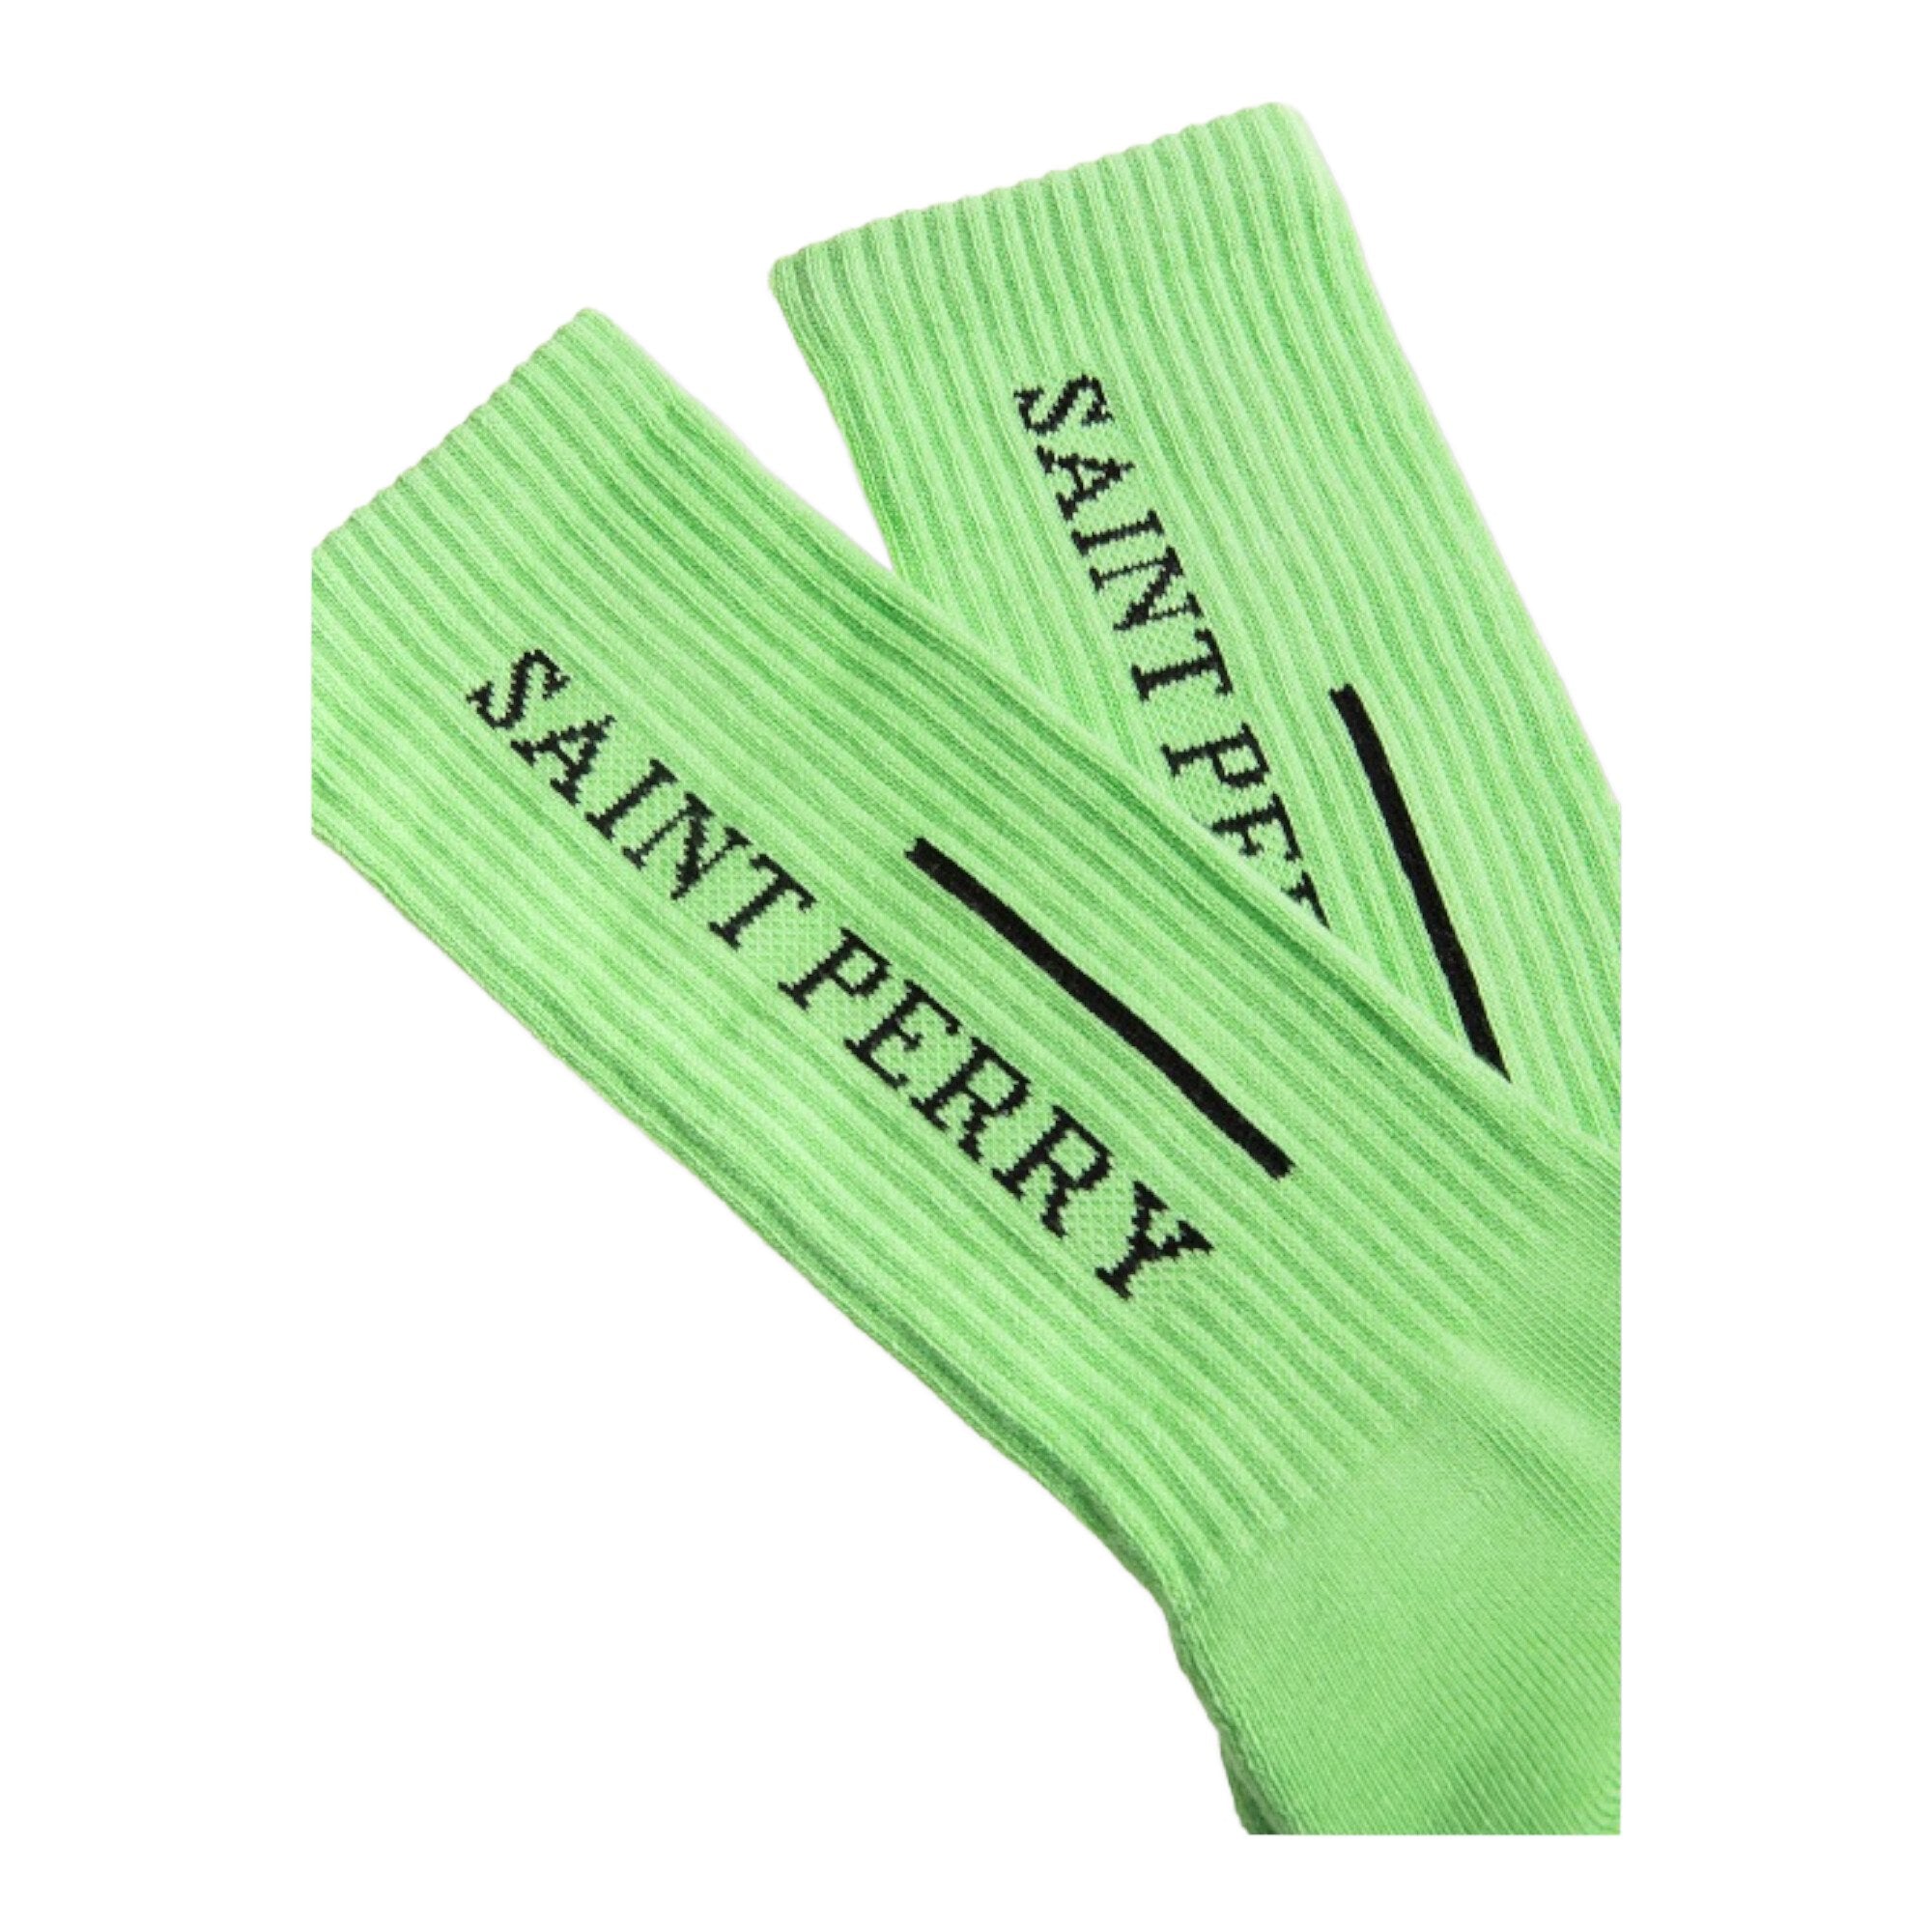 Athletic Crew Socks - SAINT PERRY